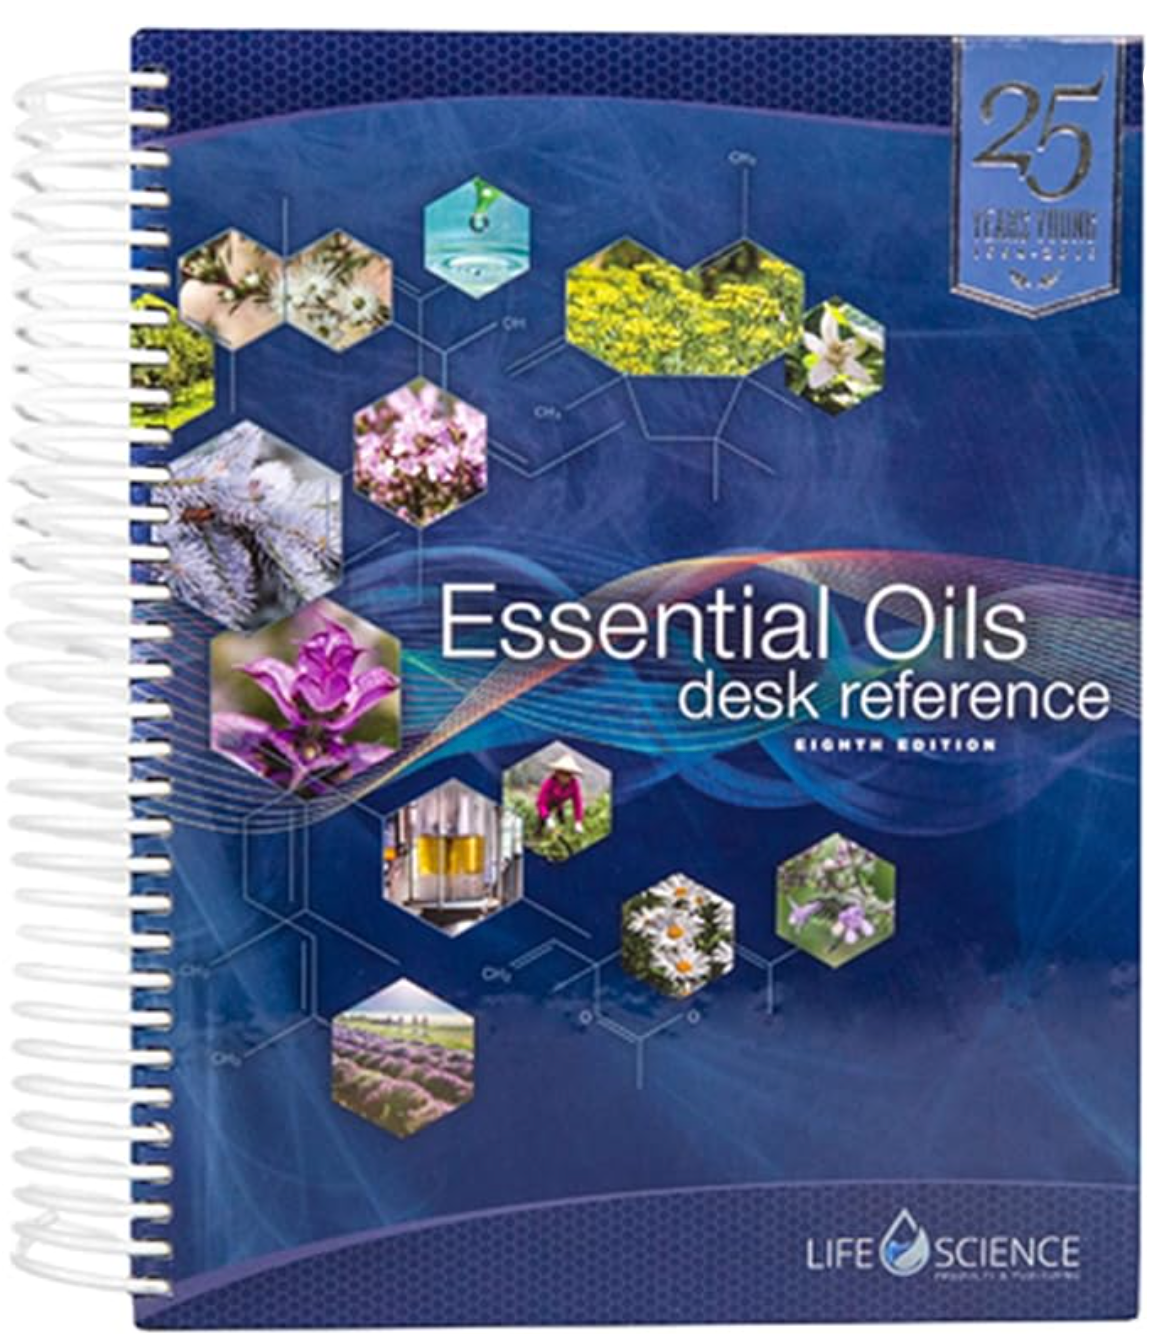 Essential oils desk reference